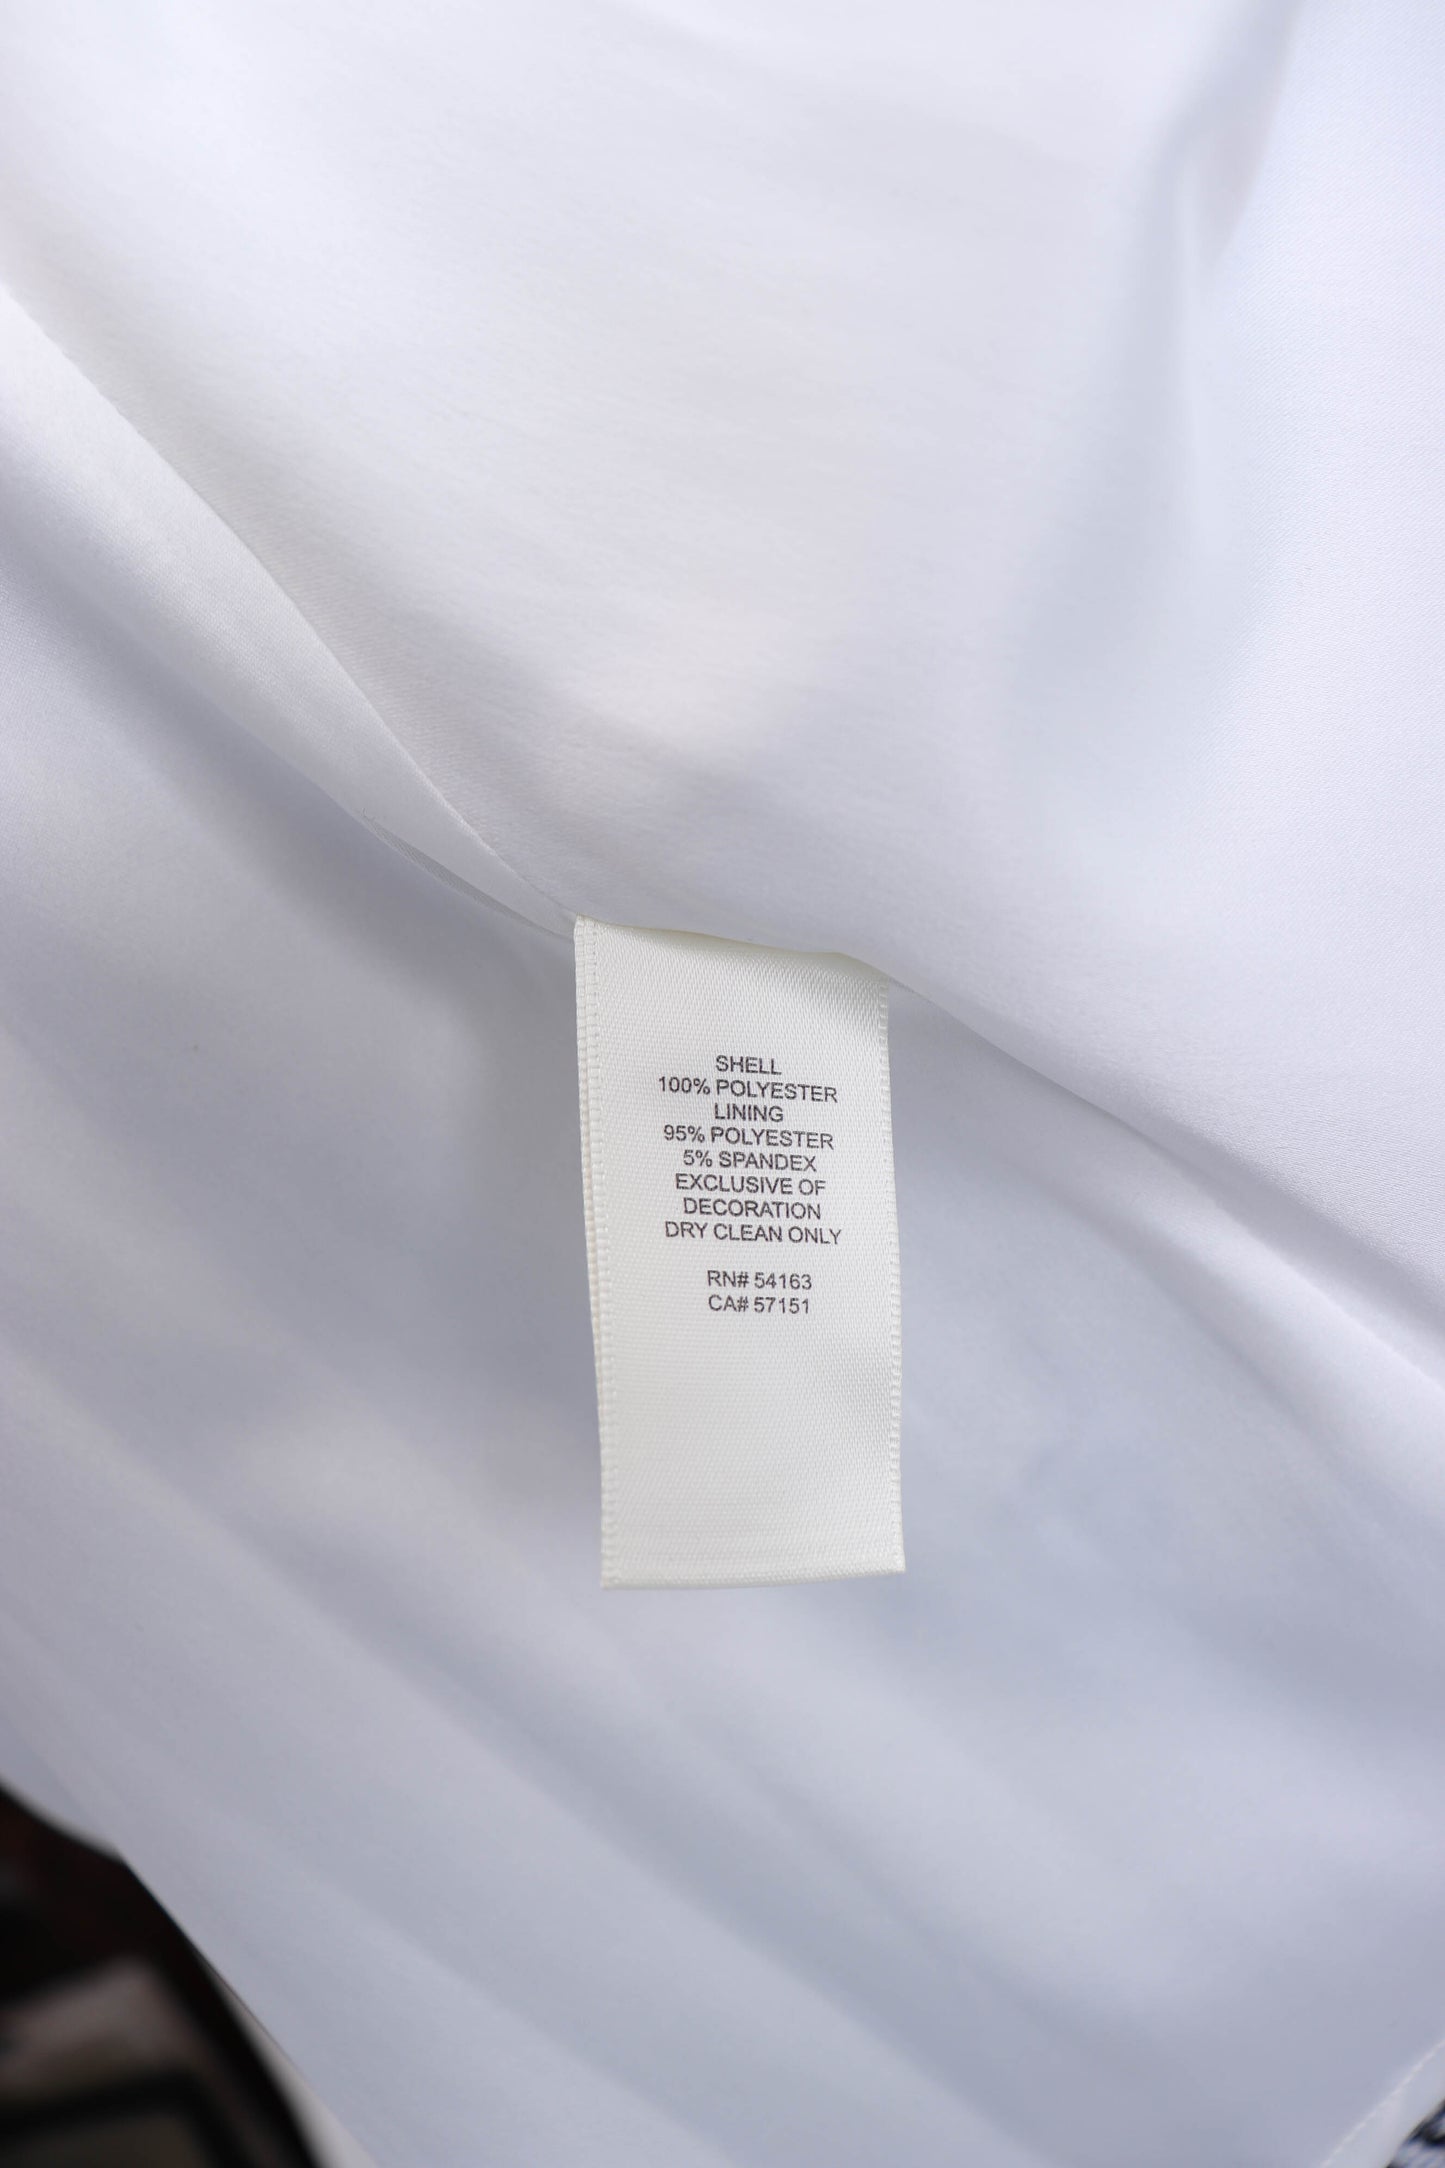 00's Black and White Sequin Mesh Midi Skirt S/M